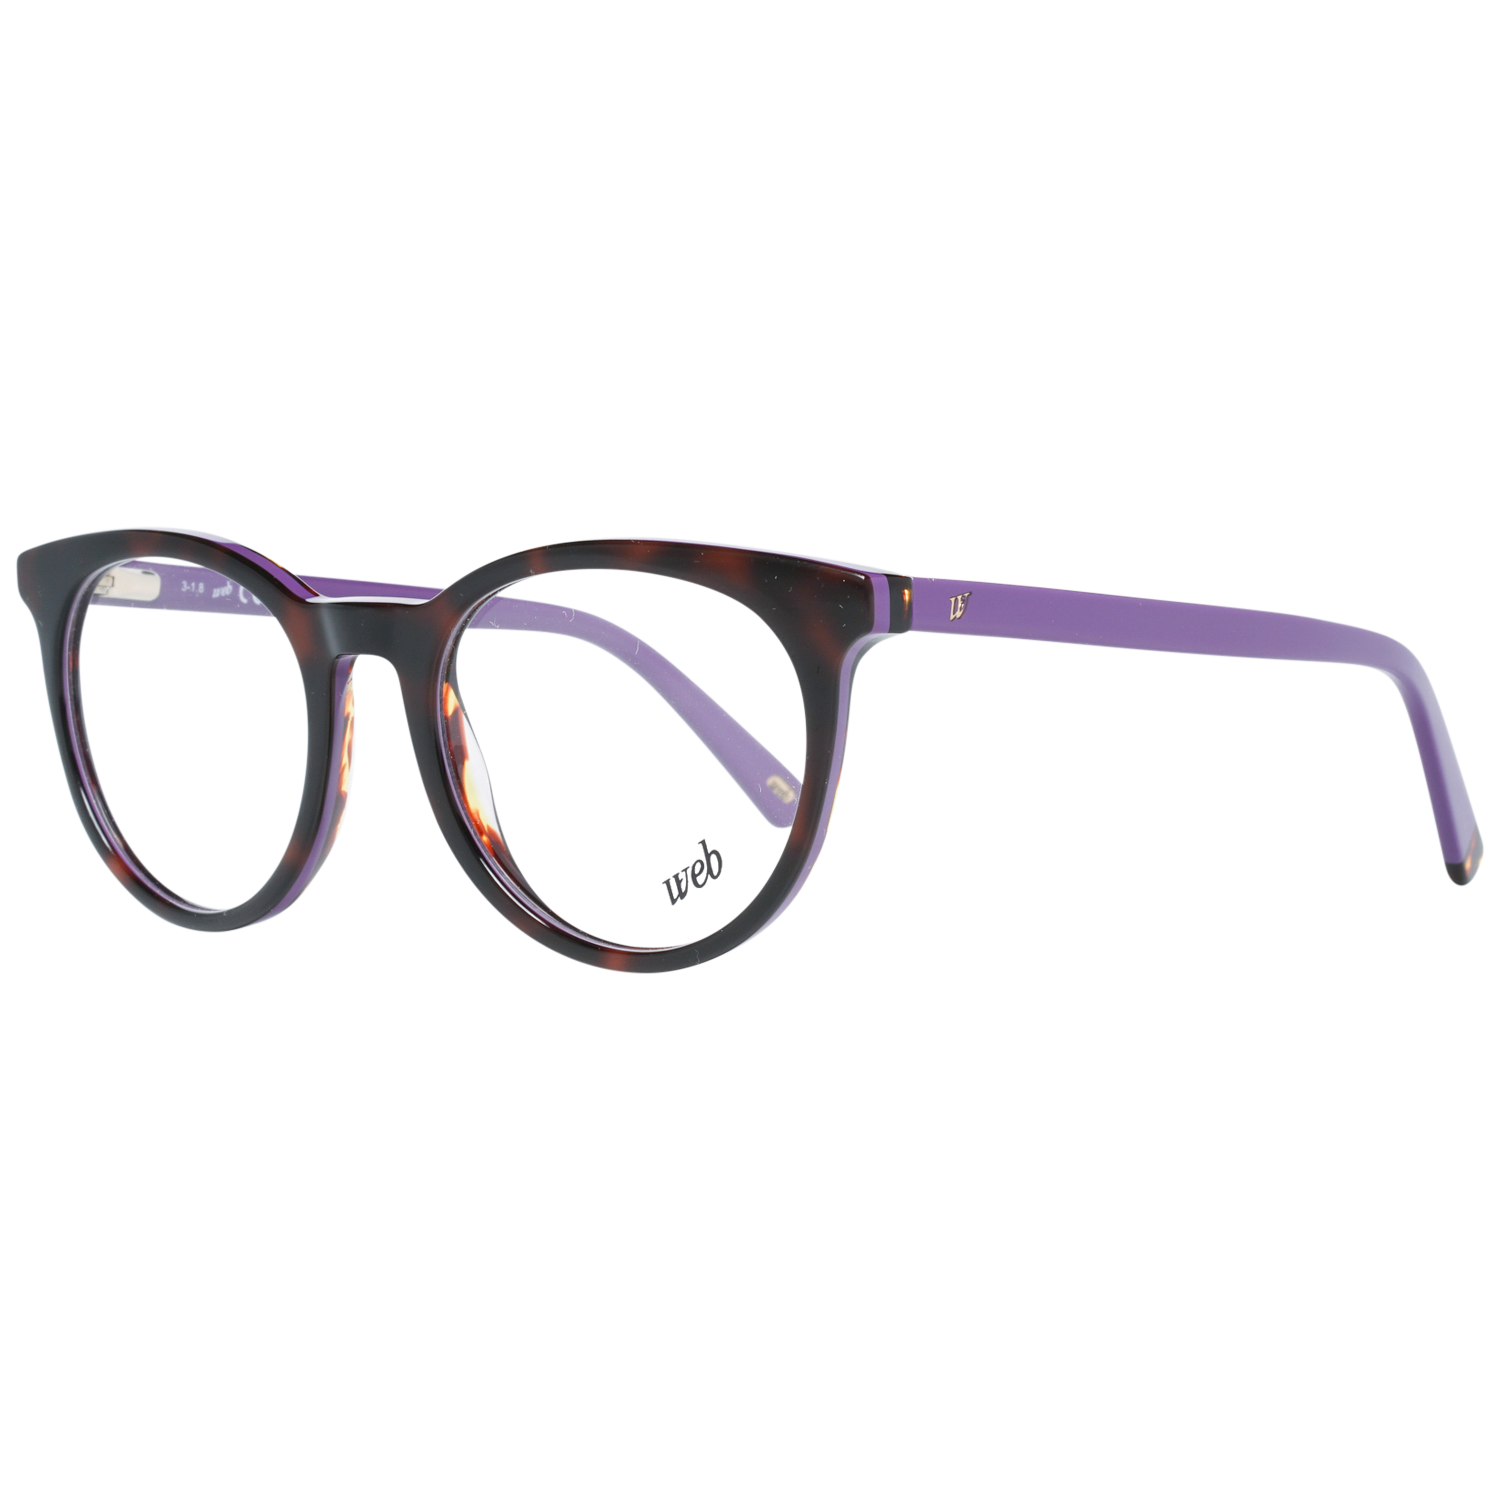 Web Frames Web Glasses Optical Frame WE5251 A56 49 Eyeglasses Eyewear UK USA Australia 